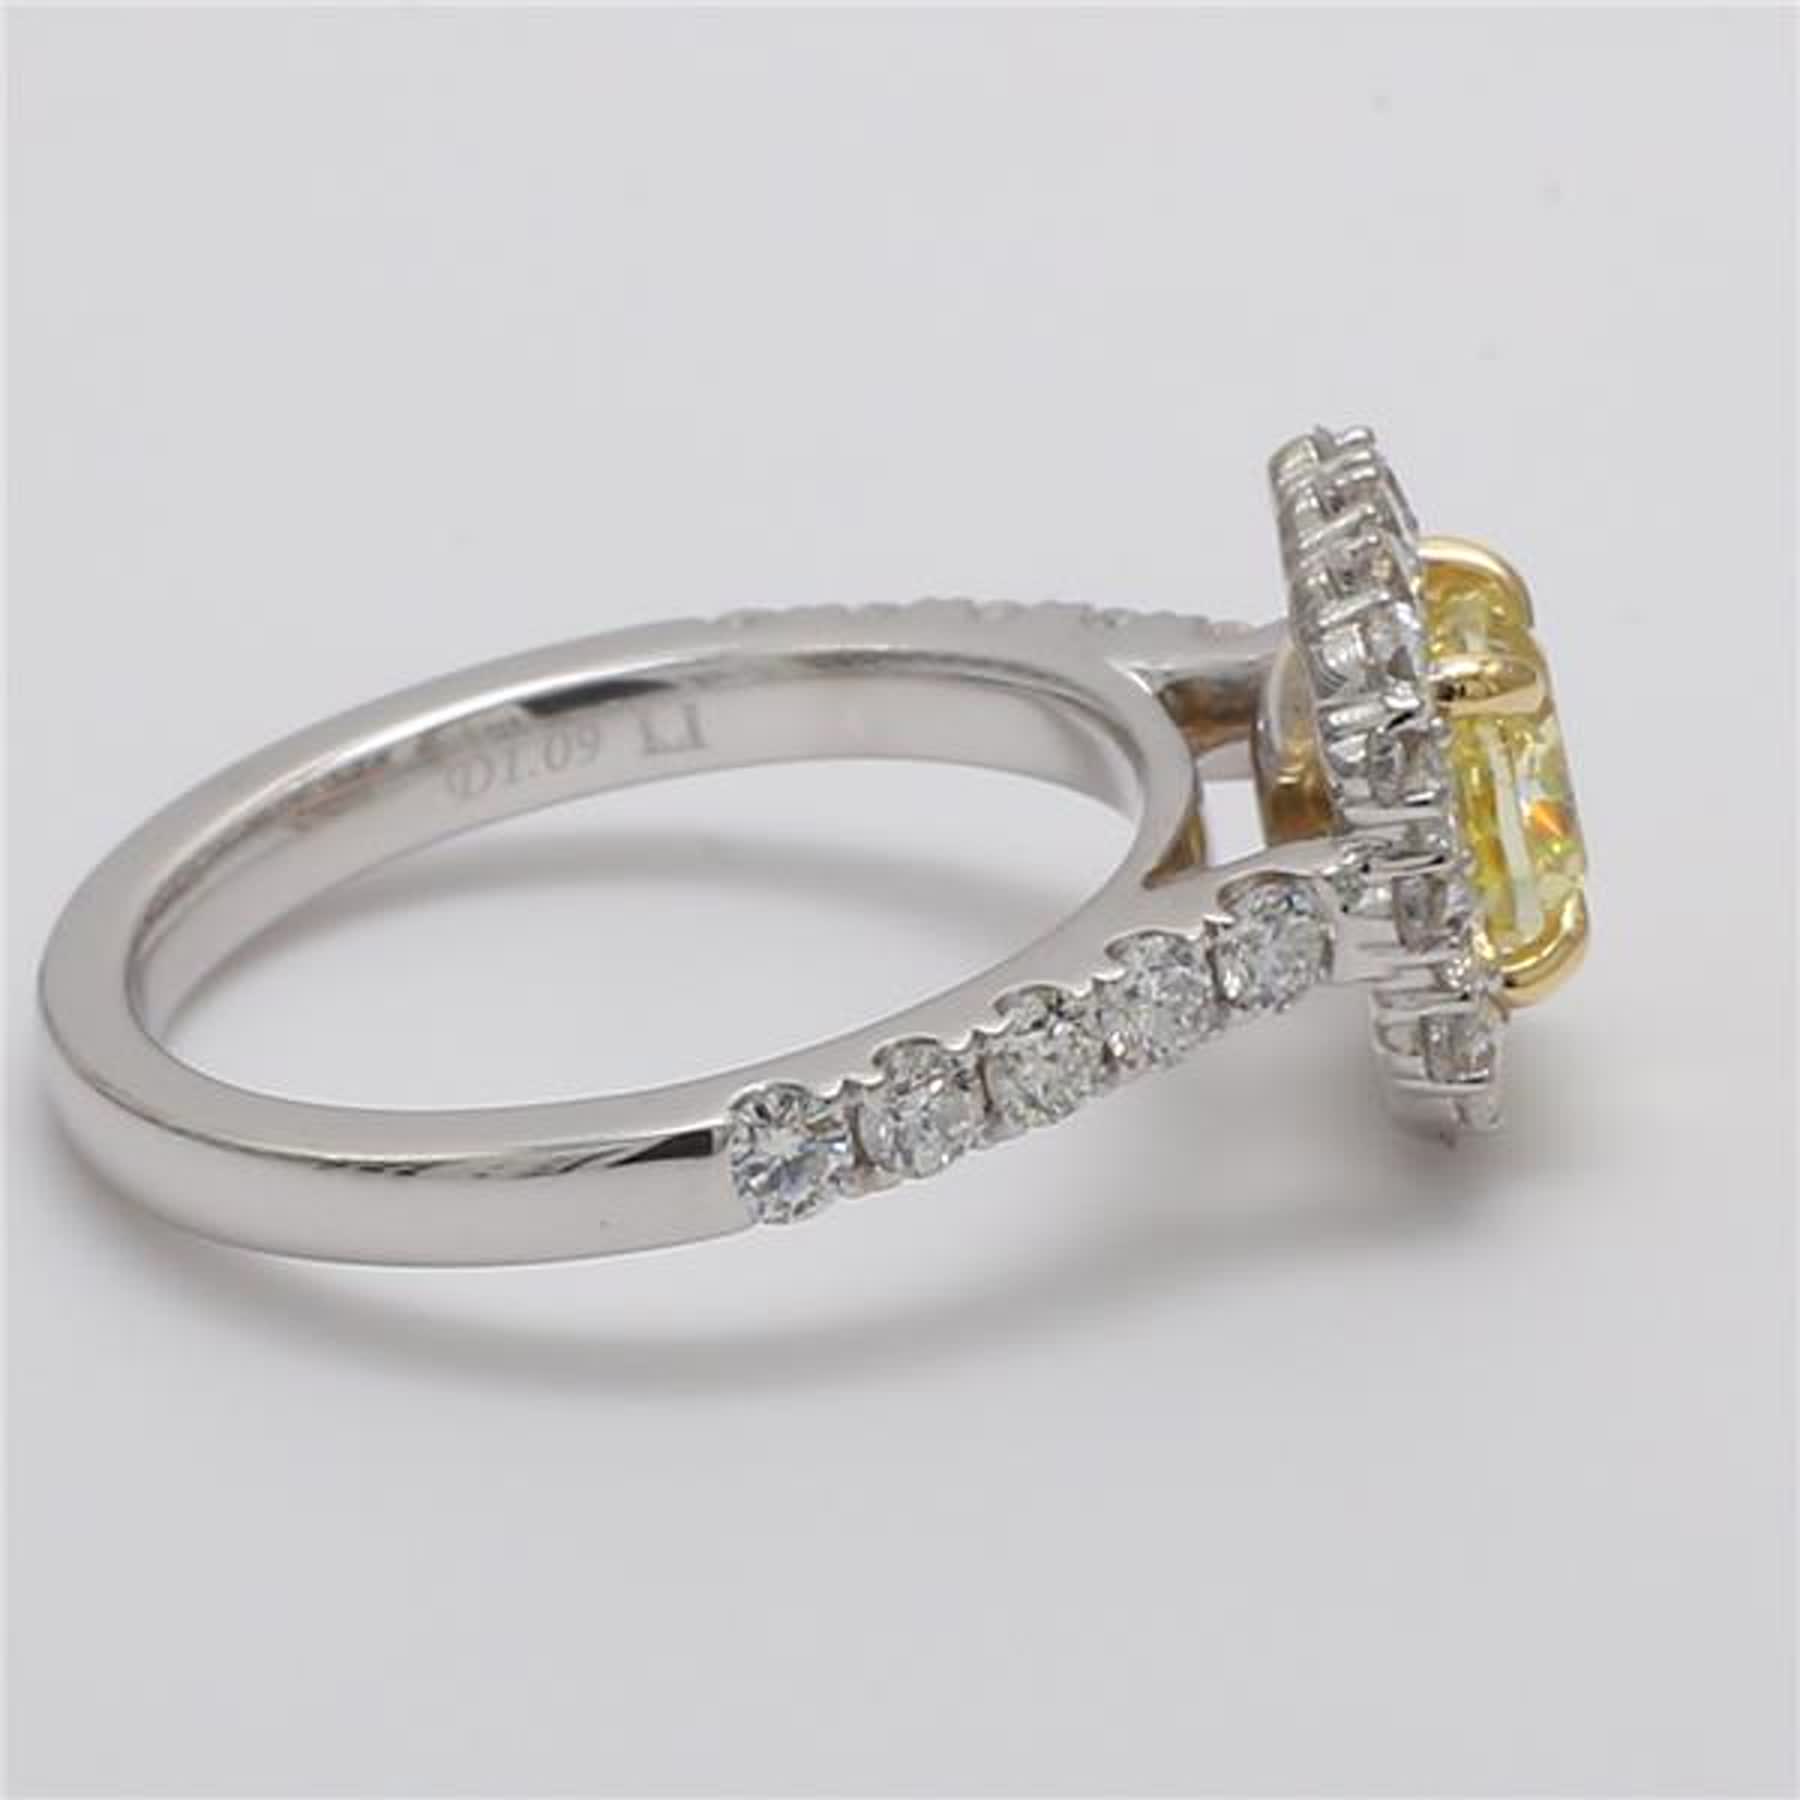 GIA Certified Natural Yellow Cushion and White Diamond 2.11 Carat TW Plat Ring